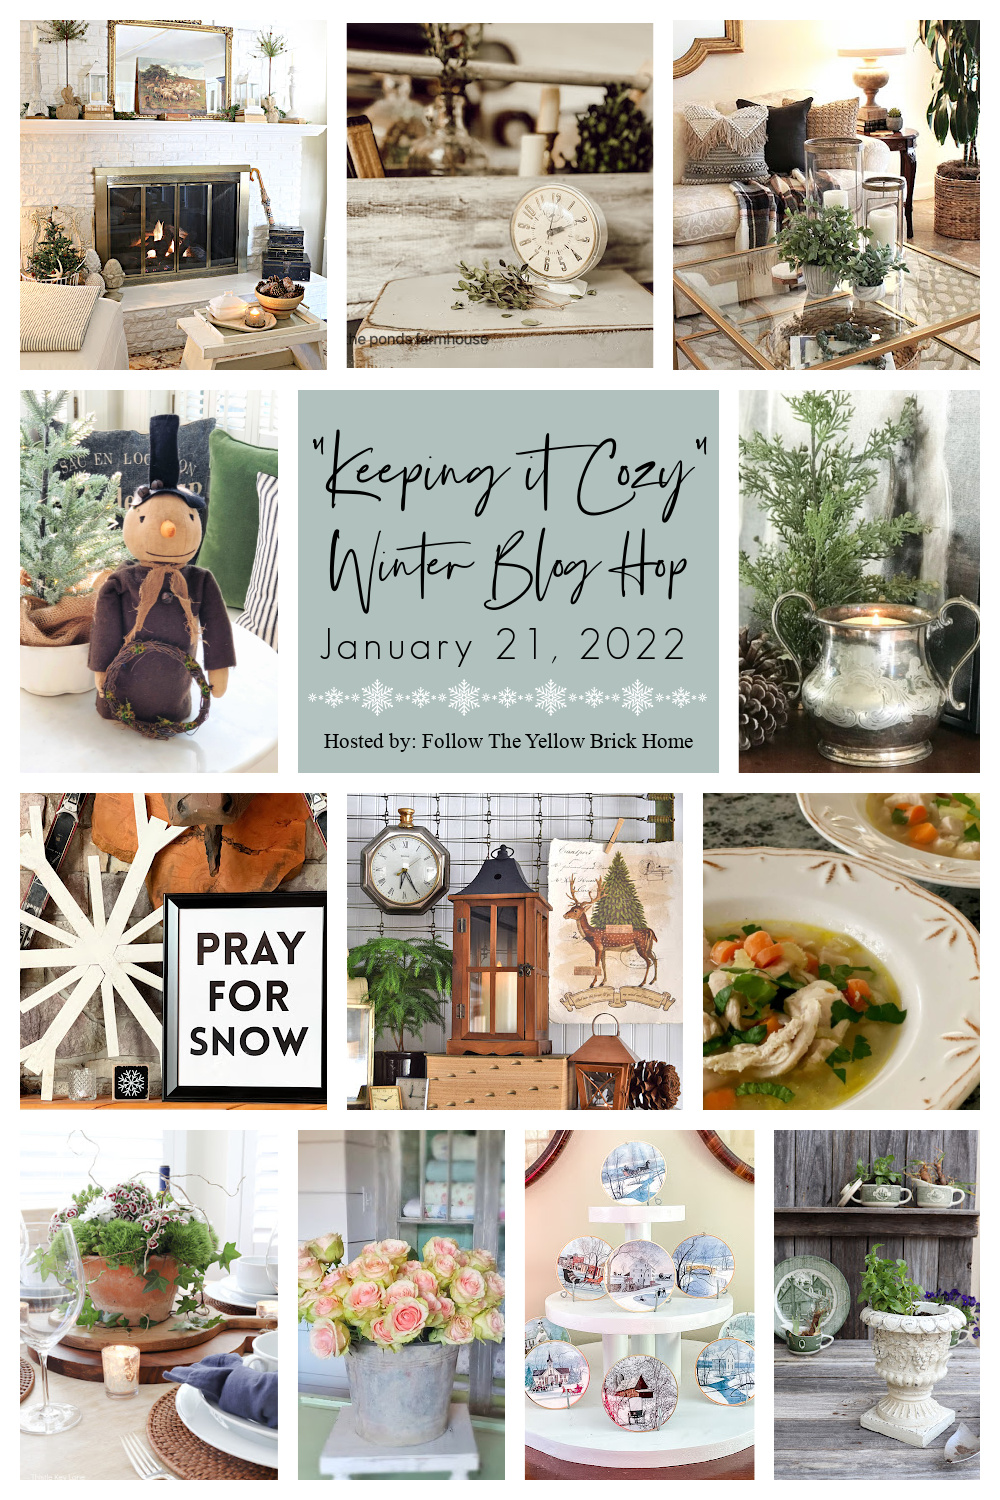 Keeping it Cozy Winter Blog Hop